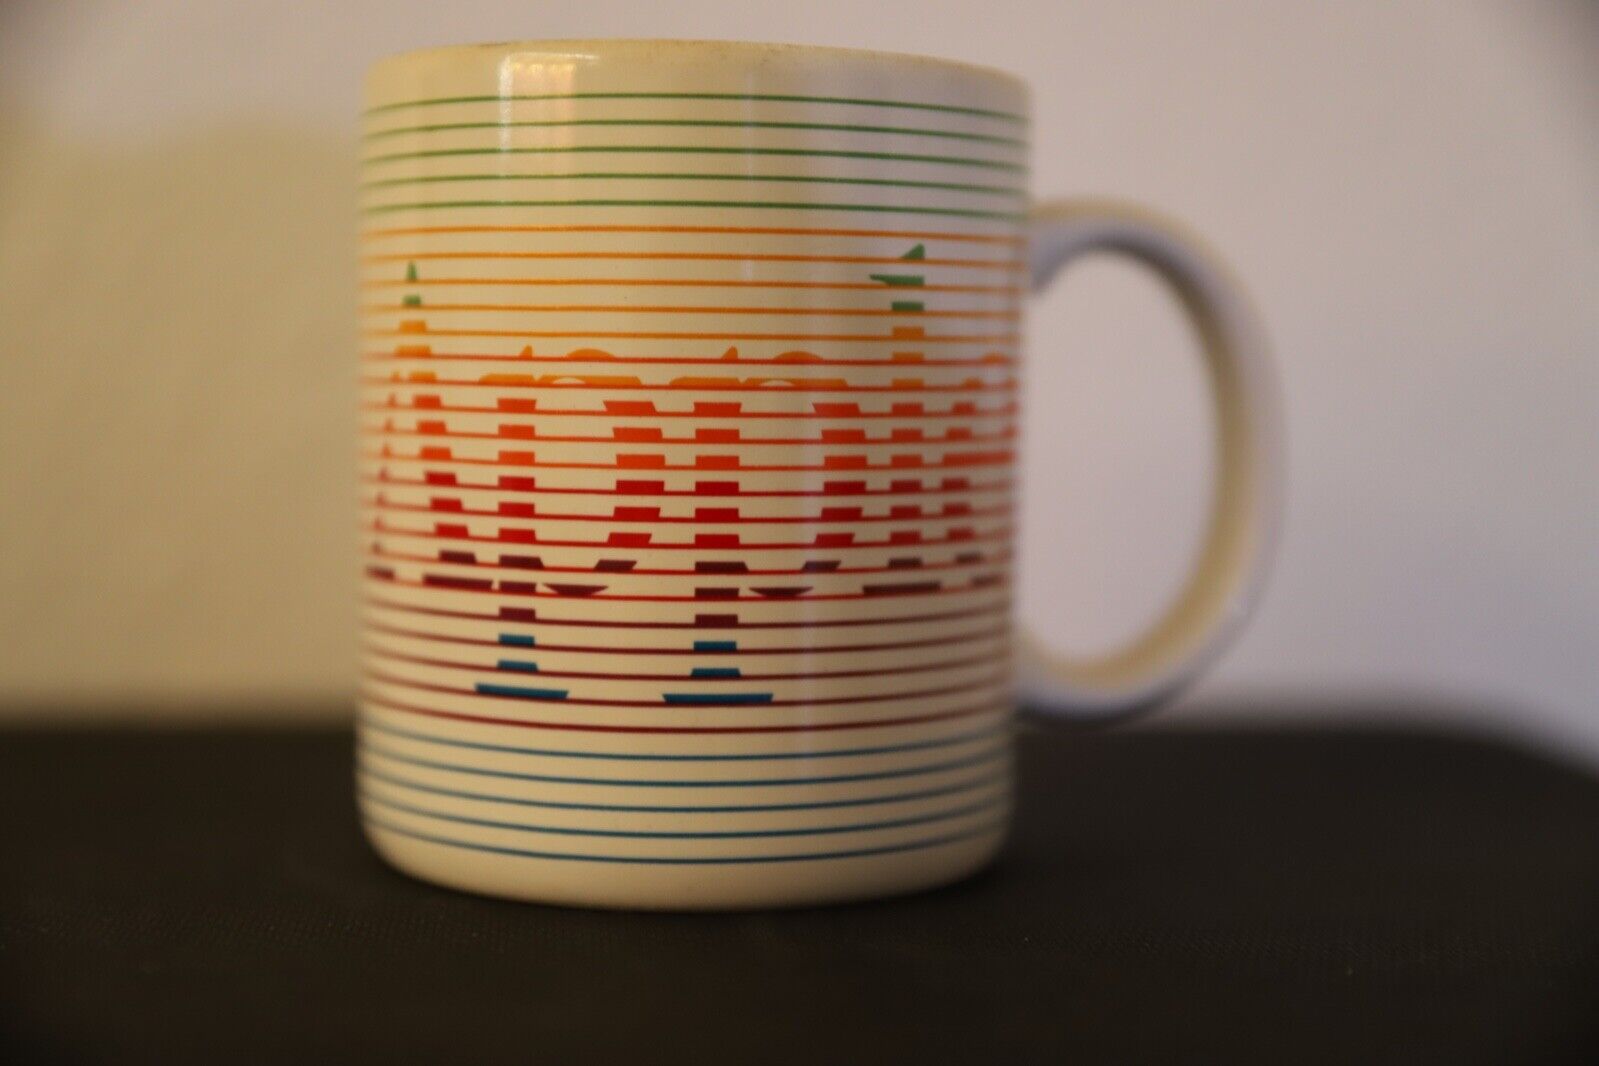 Apple coffee mug vintage 1980's - very rare